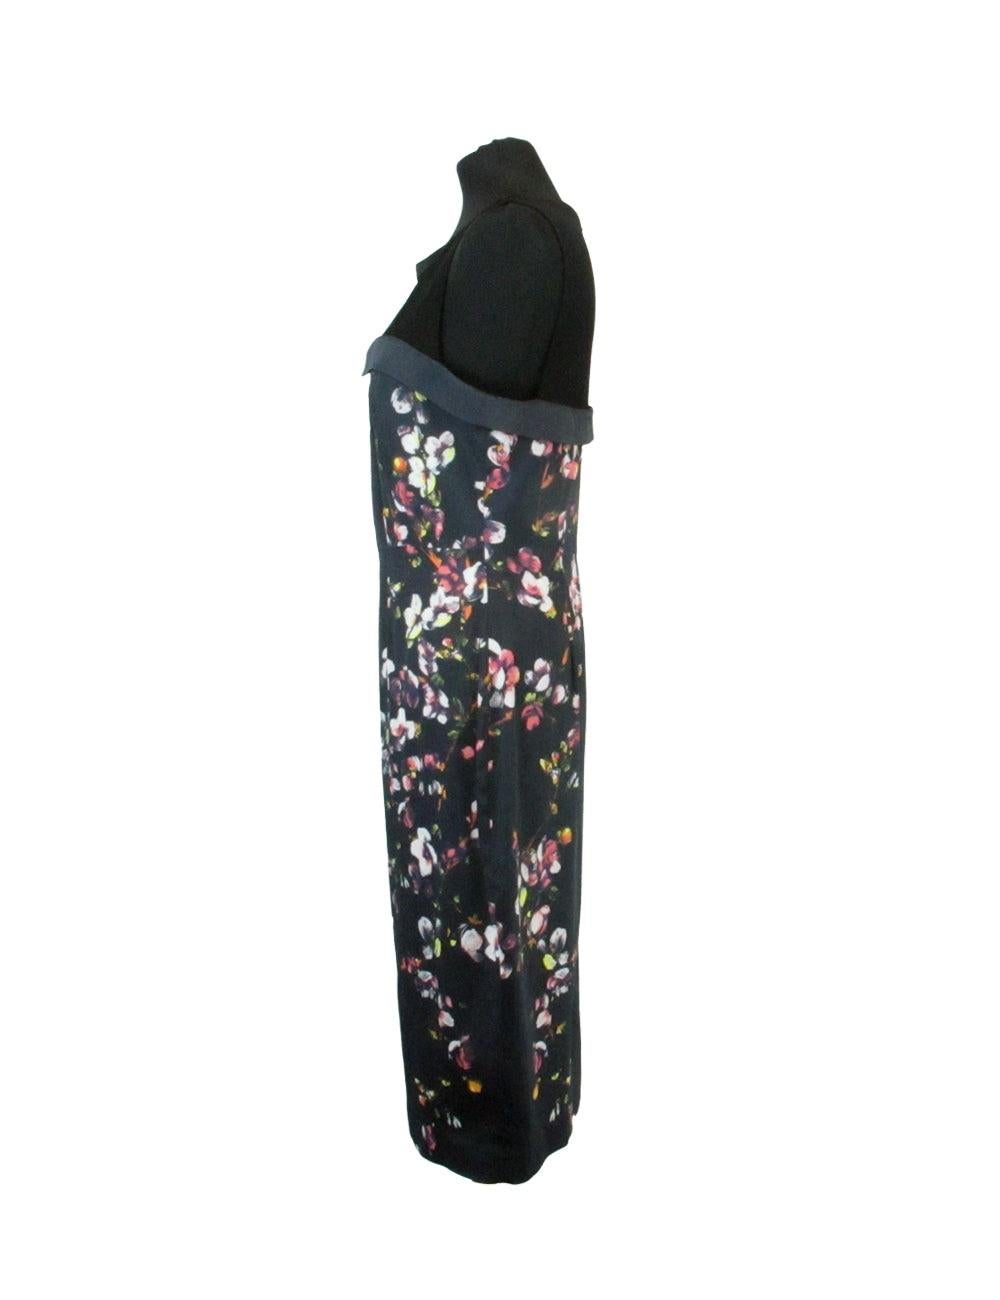 Karen Millen UK 16 Floral Black a-line Dress Collar Detail In Good Condition For Sale In Amman, JO